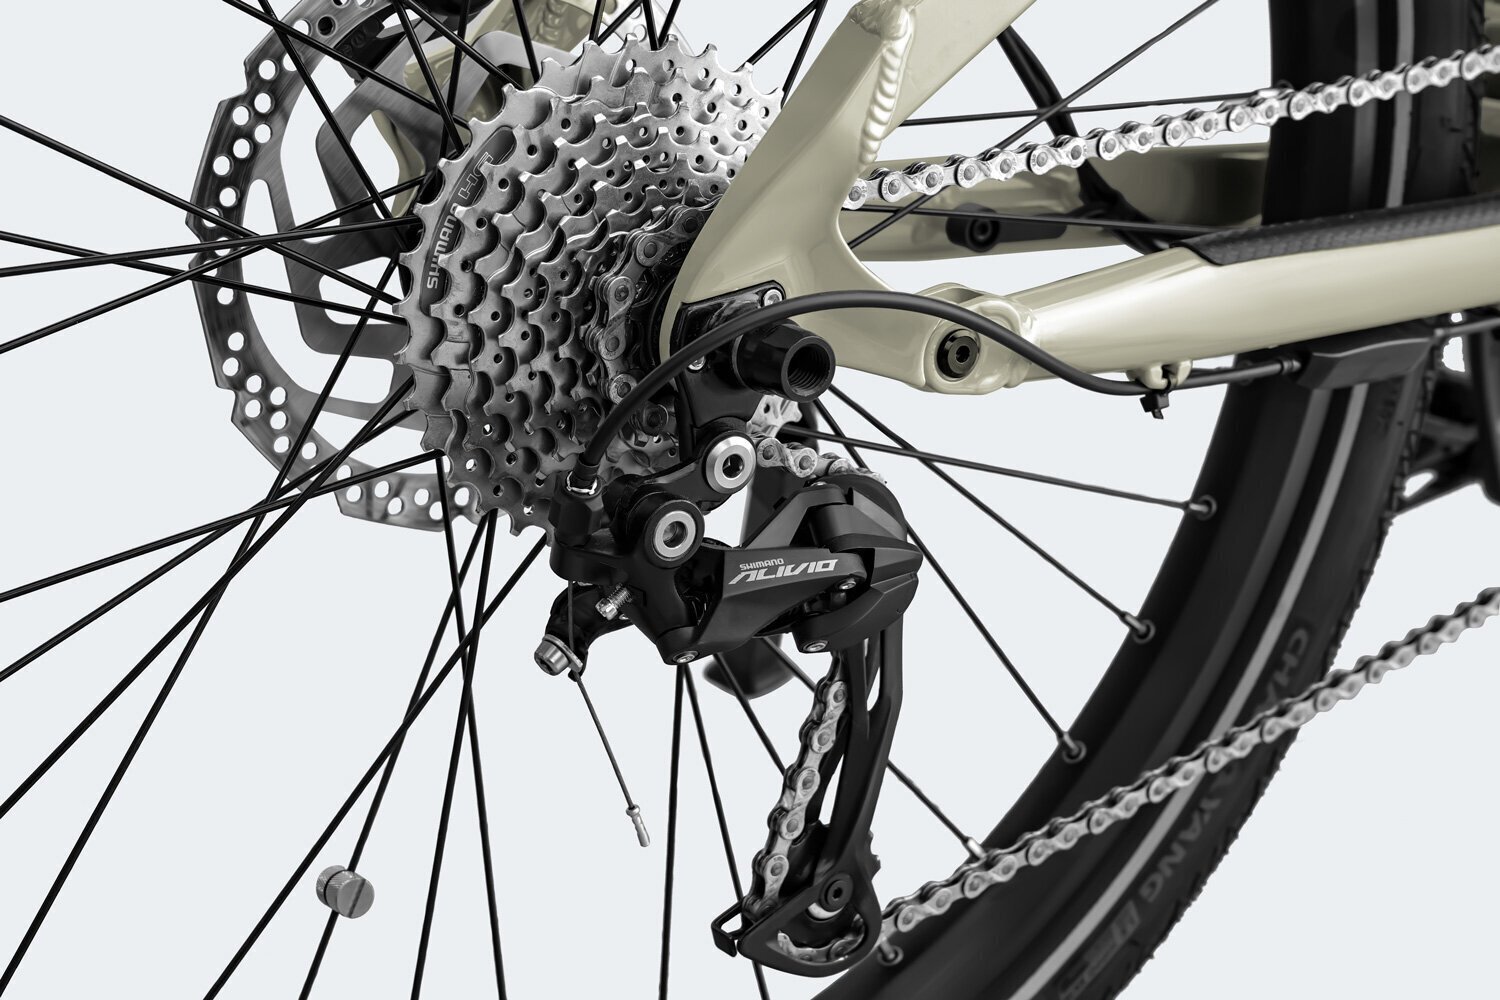 Elektriskais velosipēds Himiway A7 Pro, 27,5", dzeltens cena un informācija | Elektrovelosipēdi | 220.lv